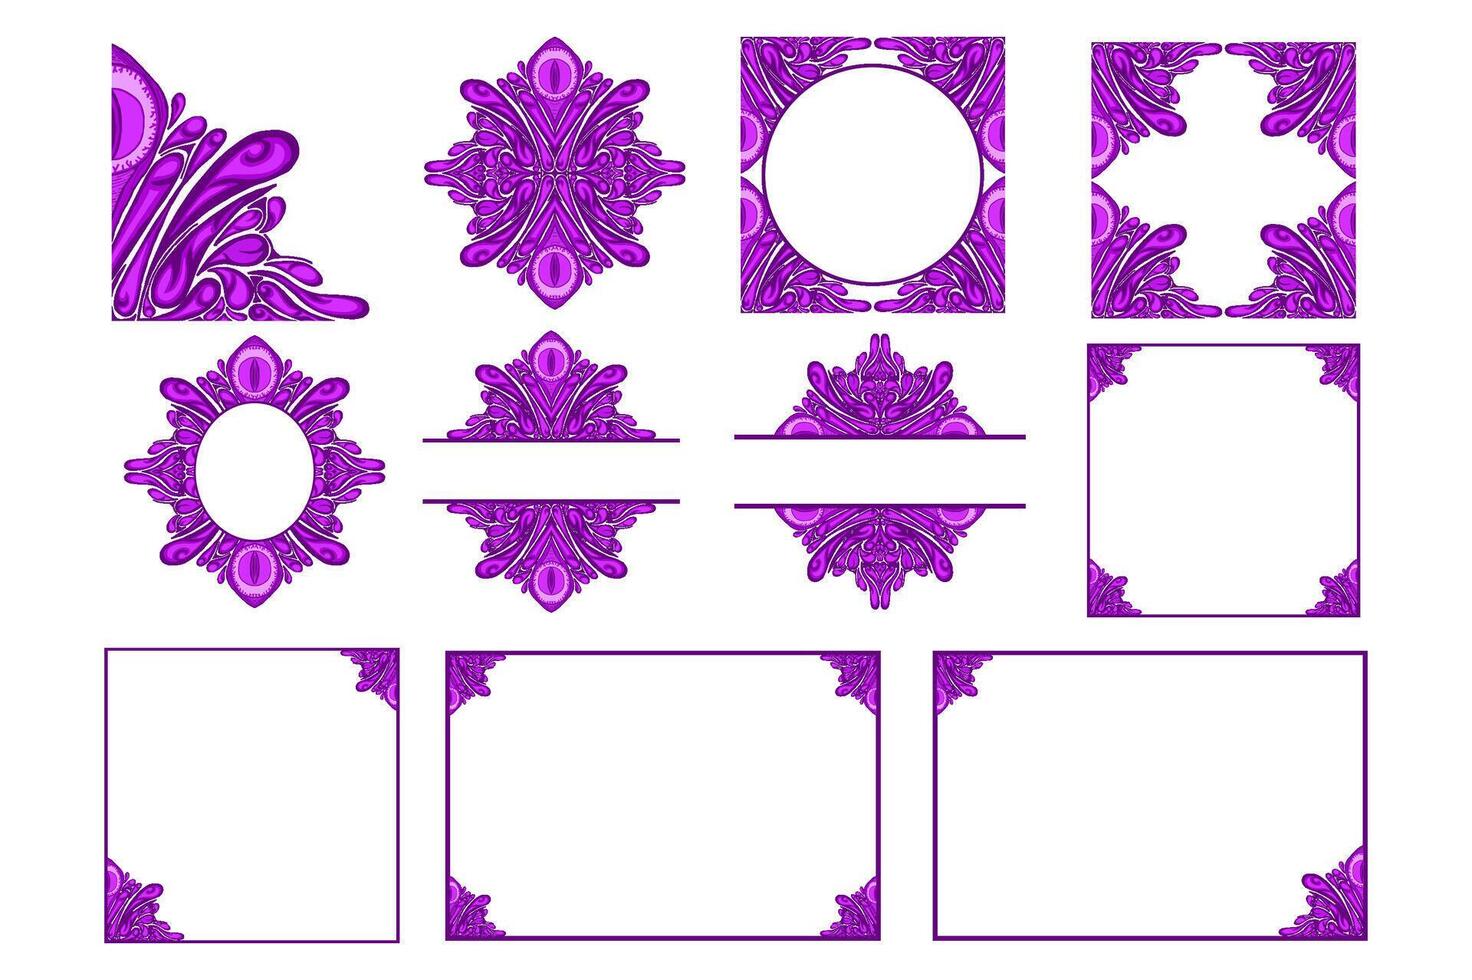 conjunto de púrpura ojo pelota ángel ornamento marco frontera vector